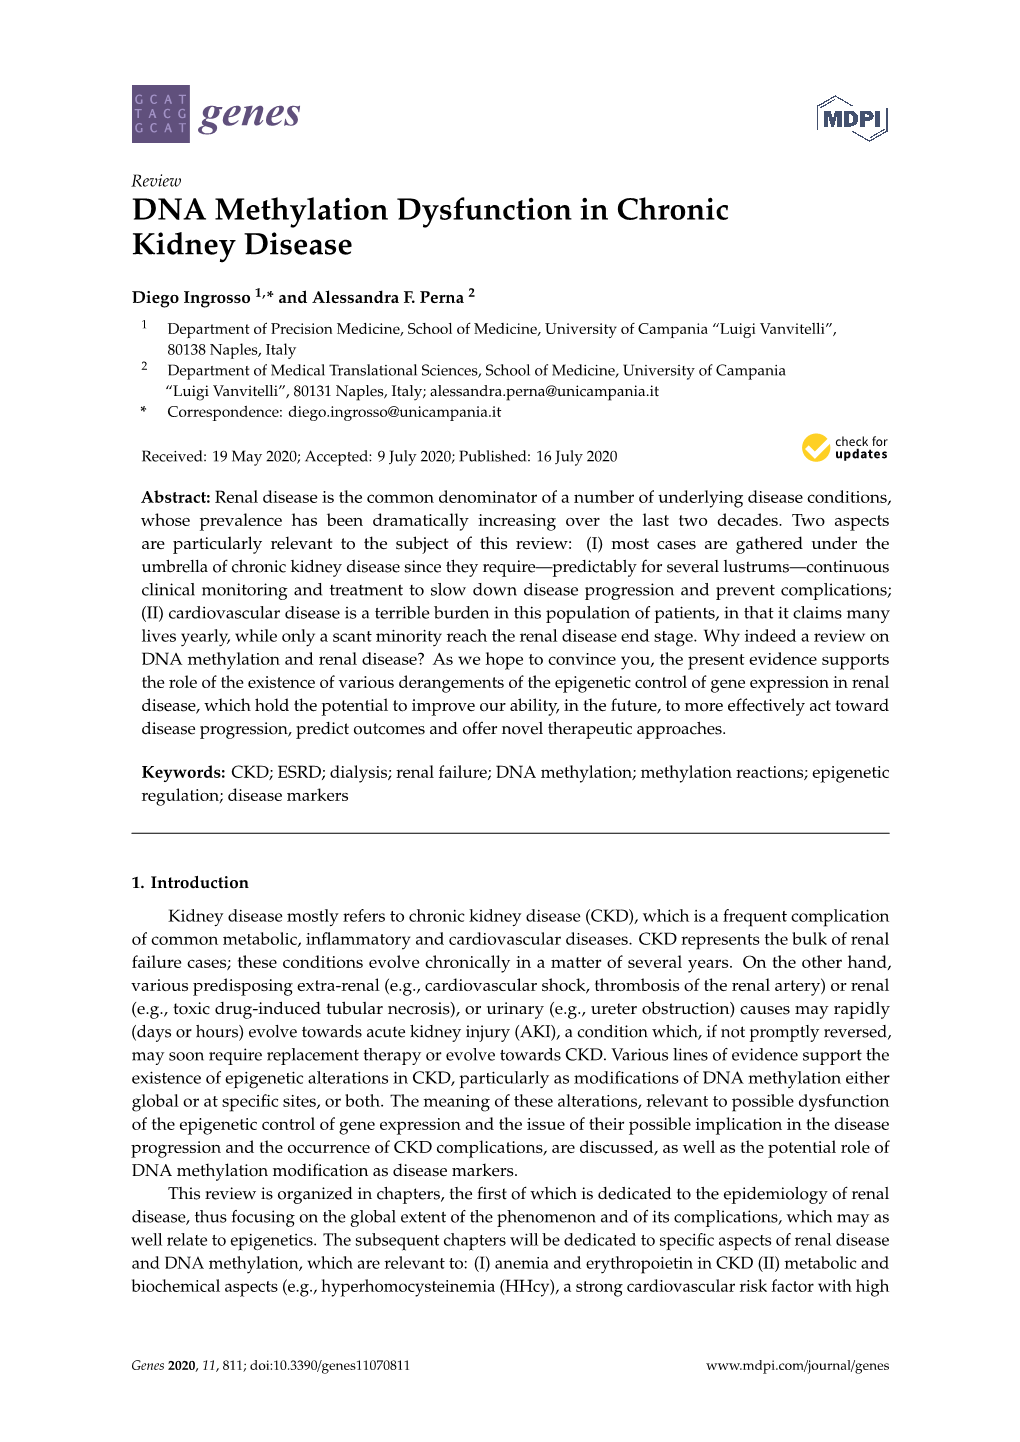 DNA Methylation Dysfunction in Chronic Kidney Disease